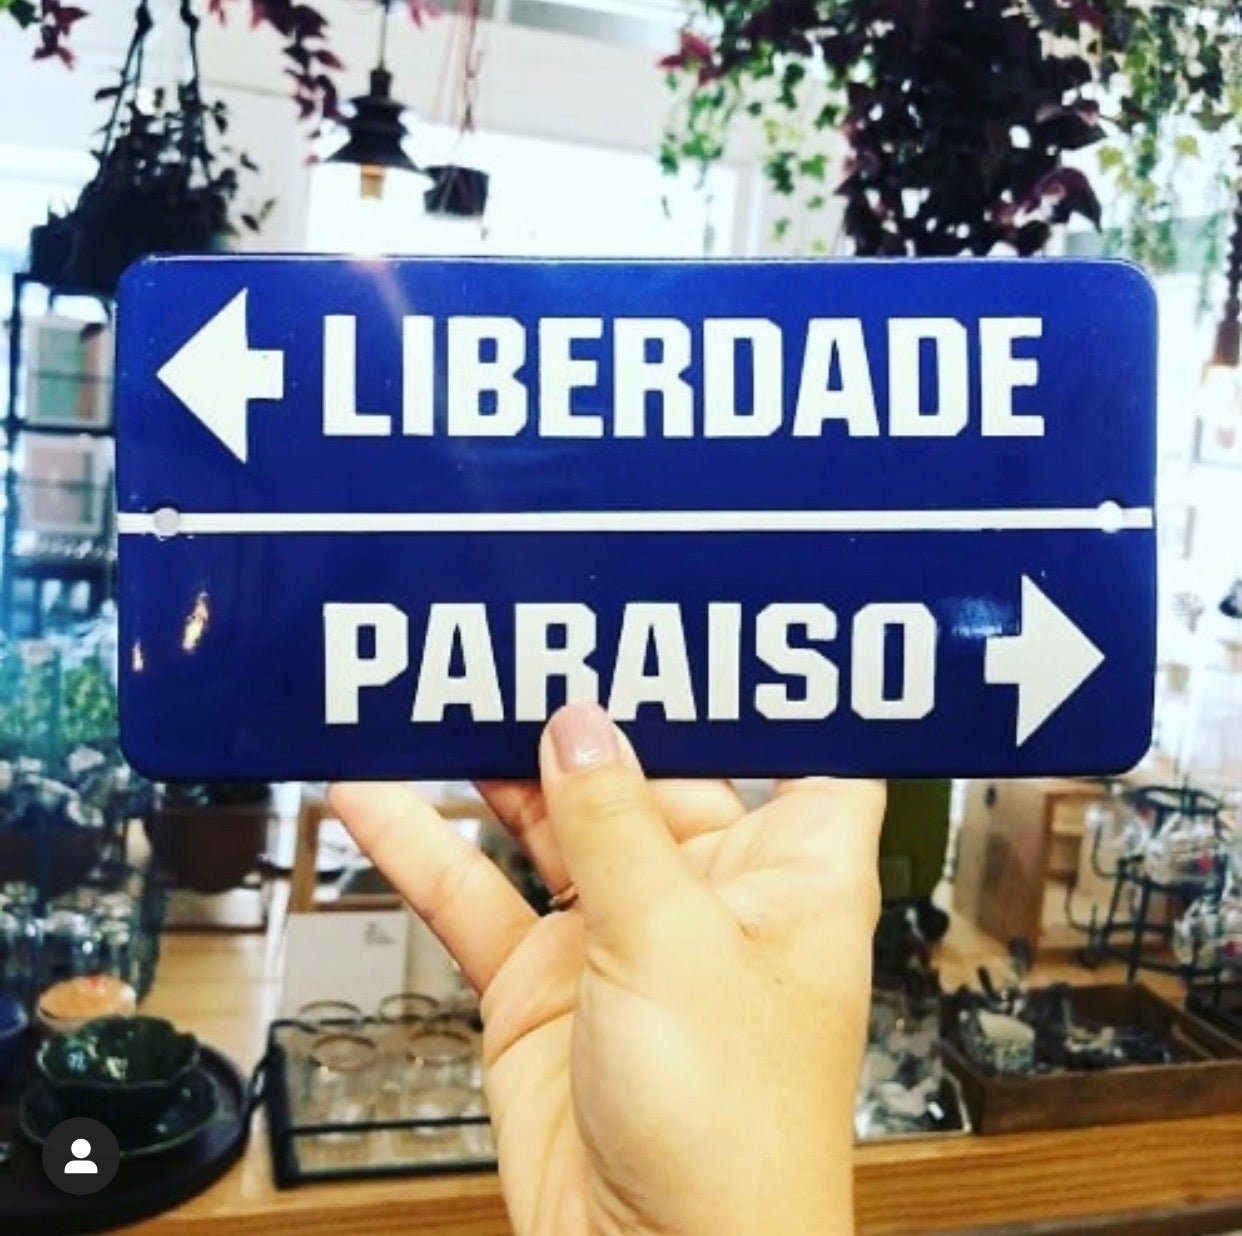 Placa Decorativa Esmaltada Liberdade Paraíso - casaquetem